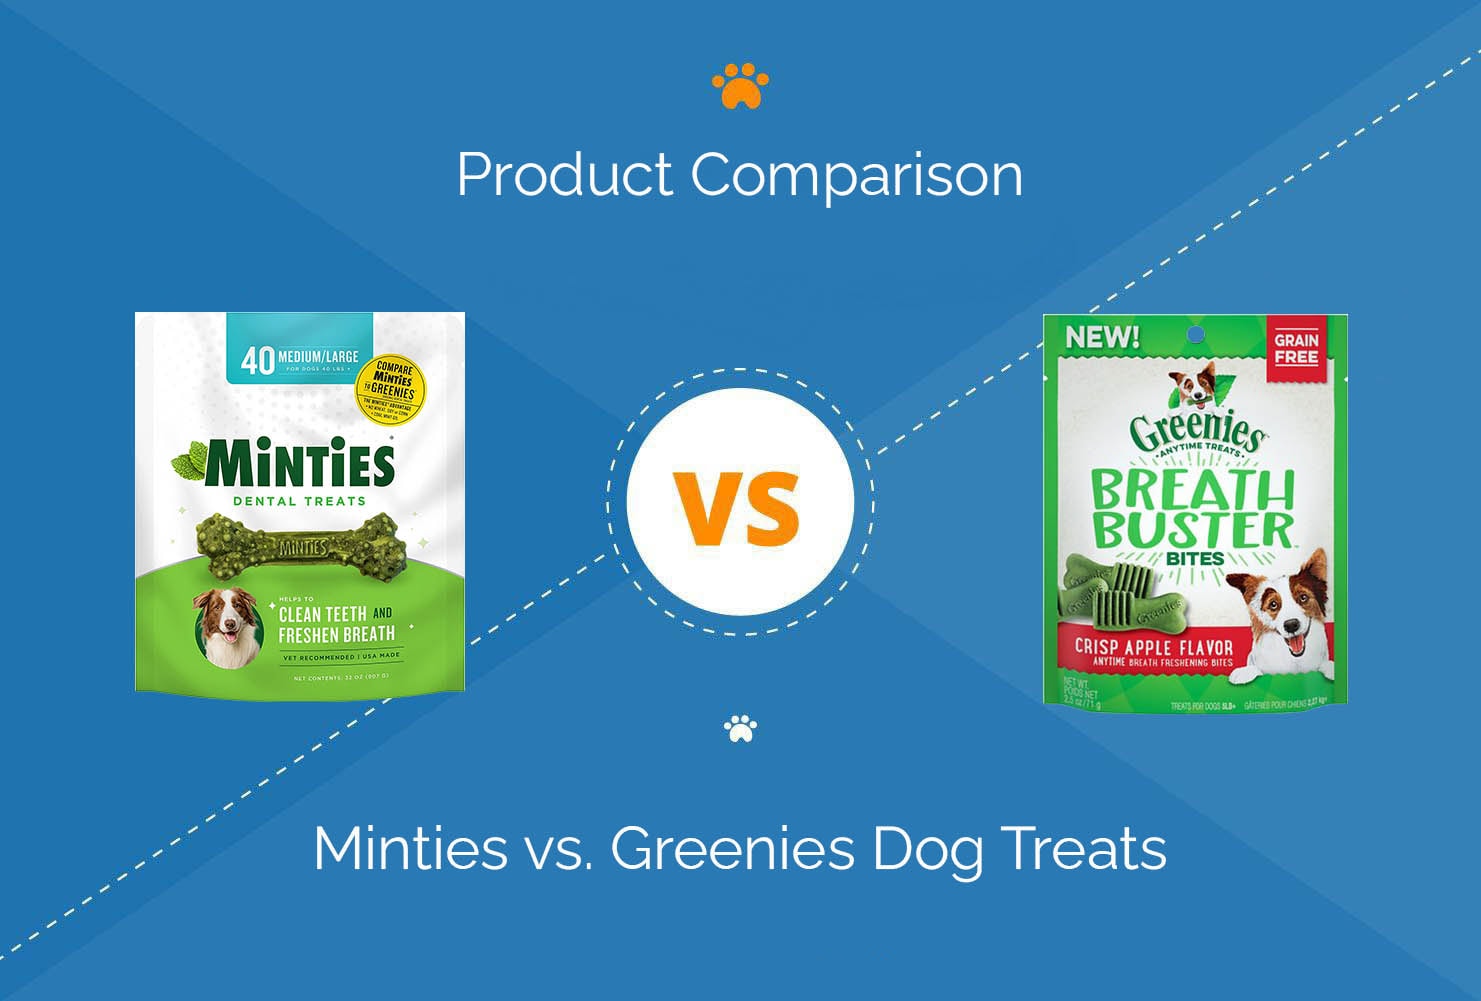 Minties vs. Greenies Dog Treats